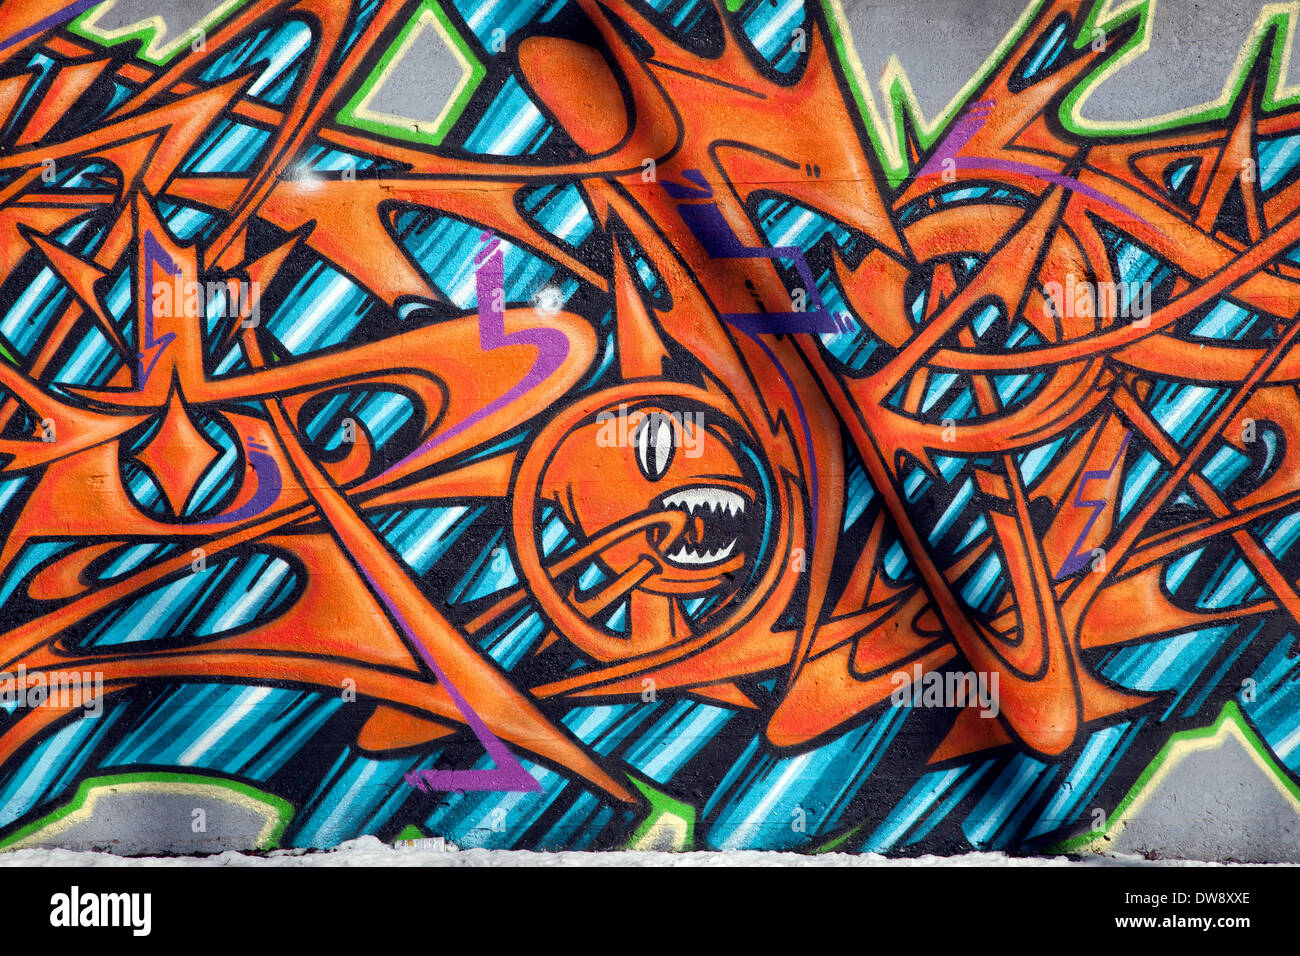 Graffiti an der Wand, Detroit, Michigan/USA Stockfoto